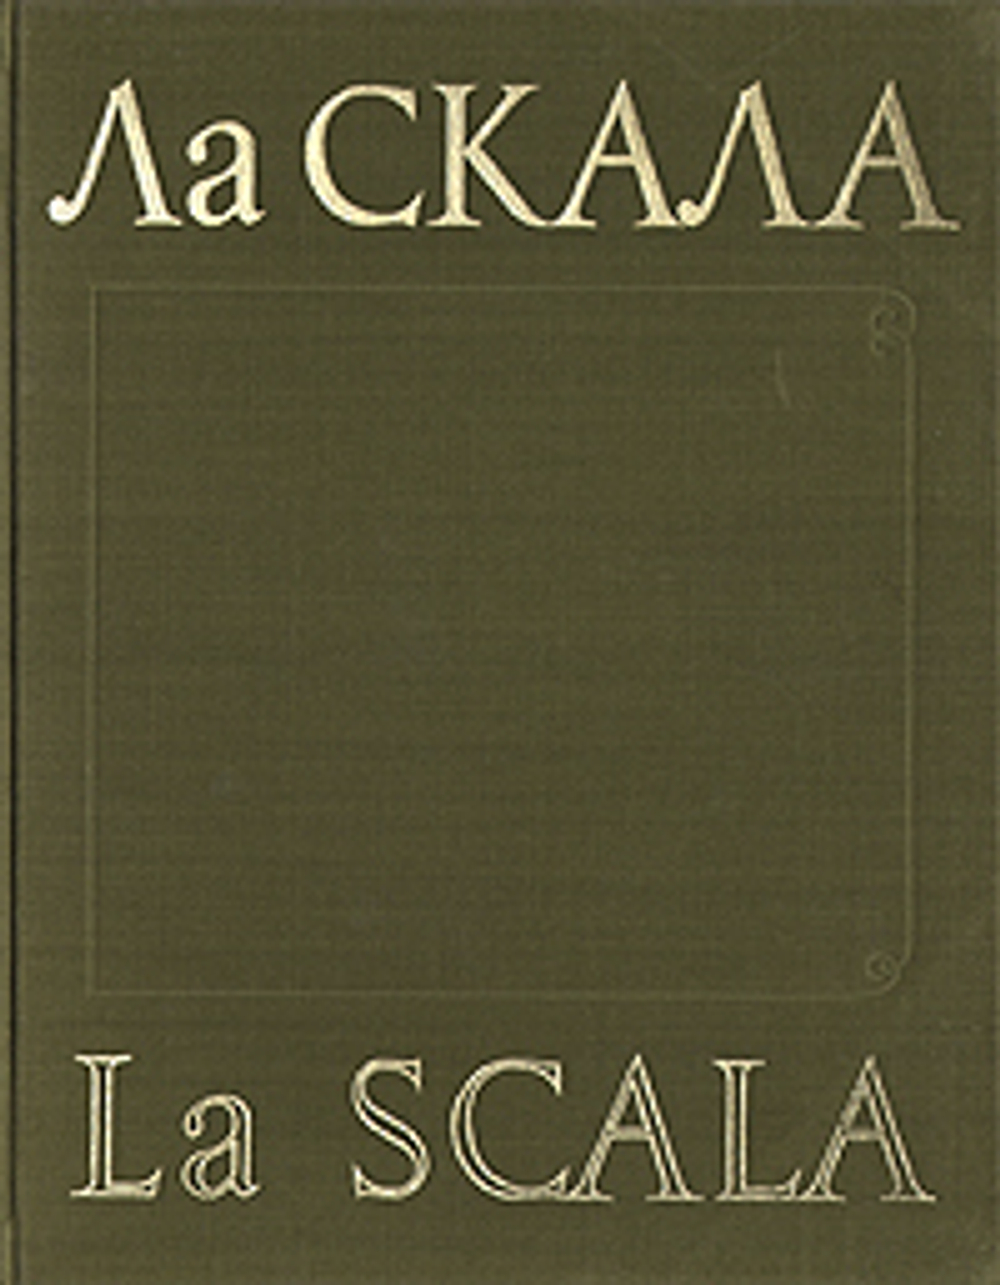 Ла Скала / La Scala